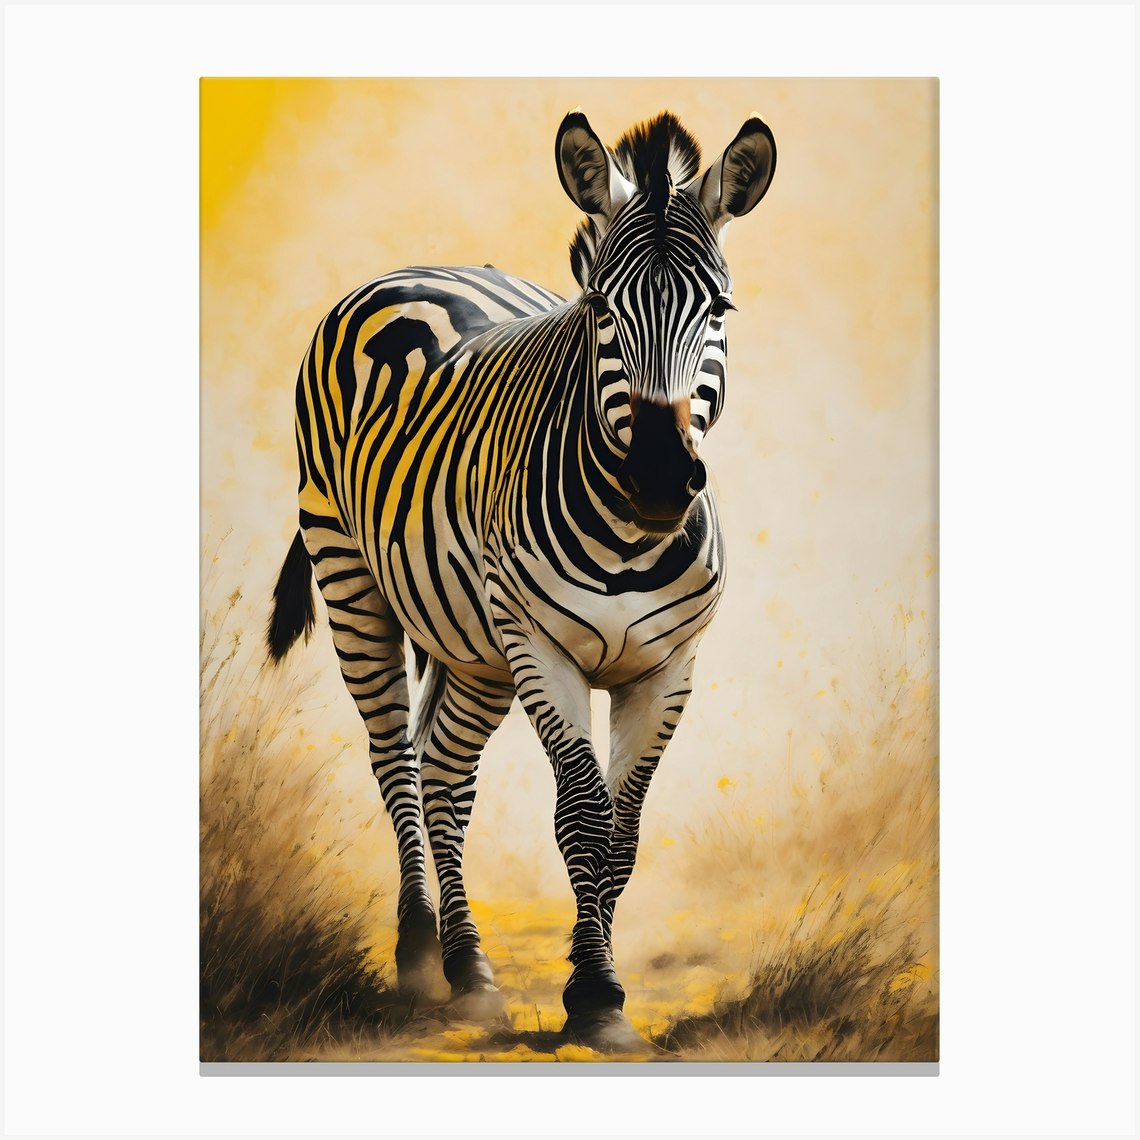 Zebra 1 Canvas Print by DIGITAL_AI - Fy